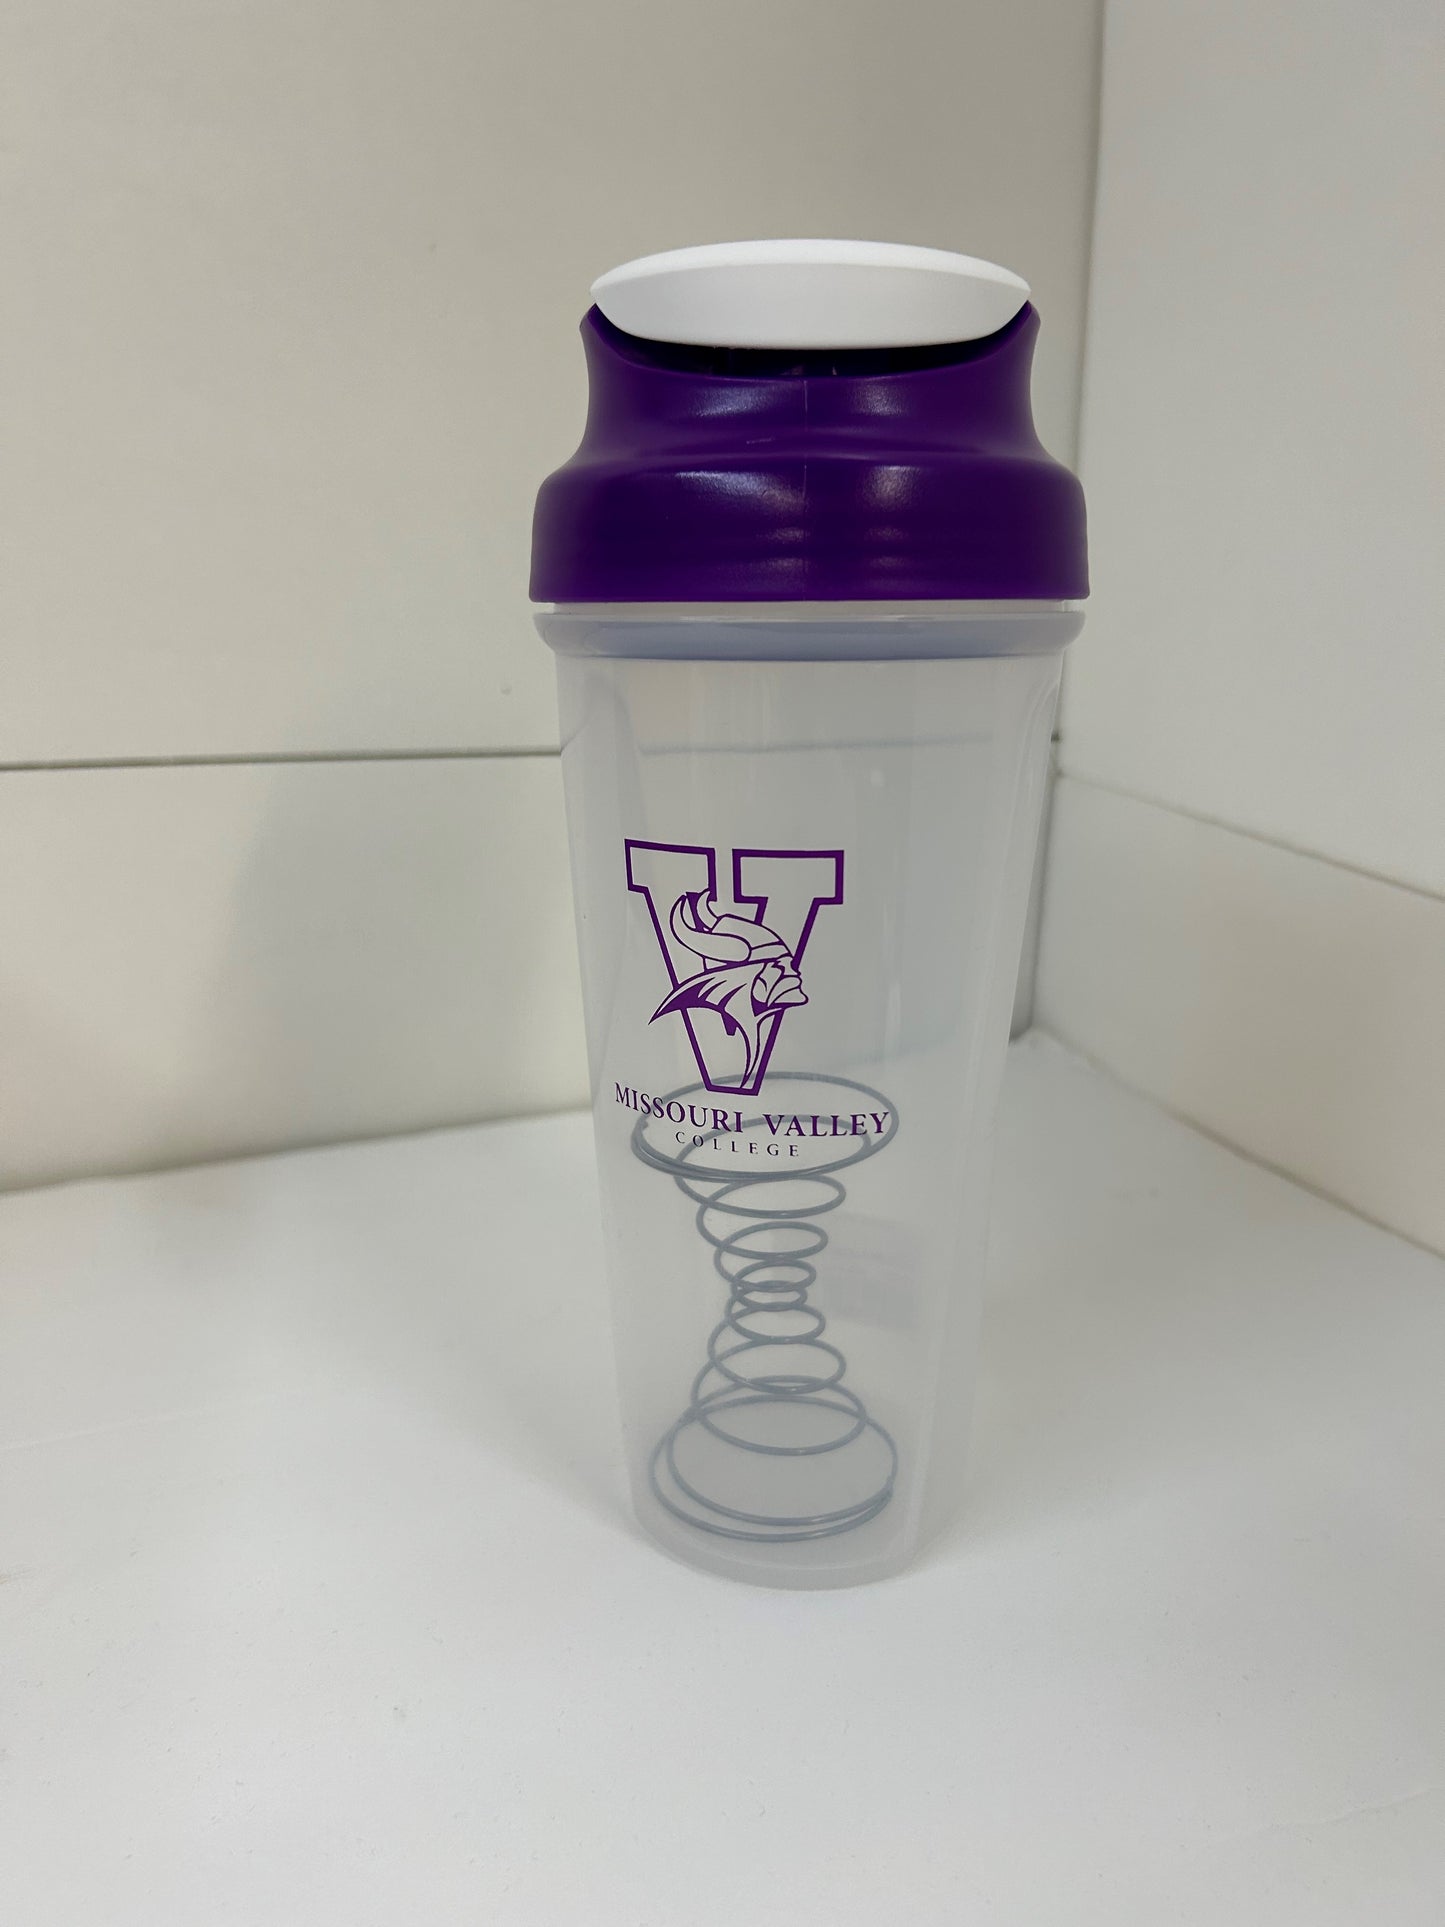 Shaker bottle with Missouri Valley logo